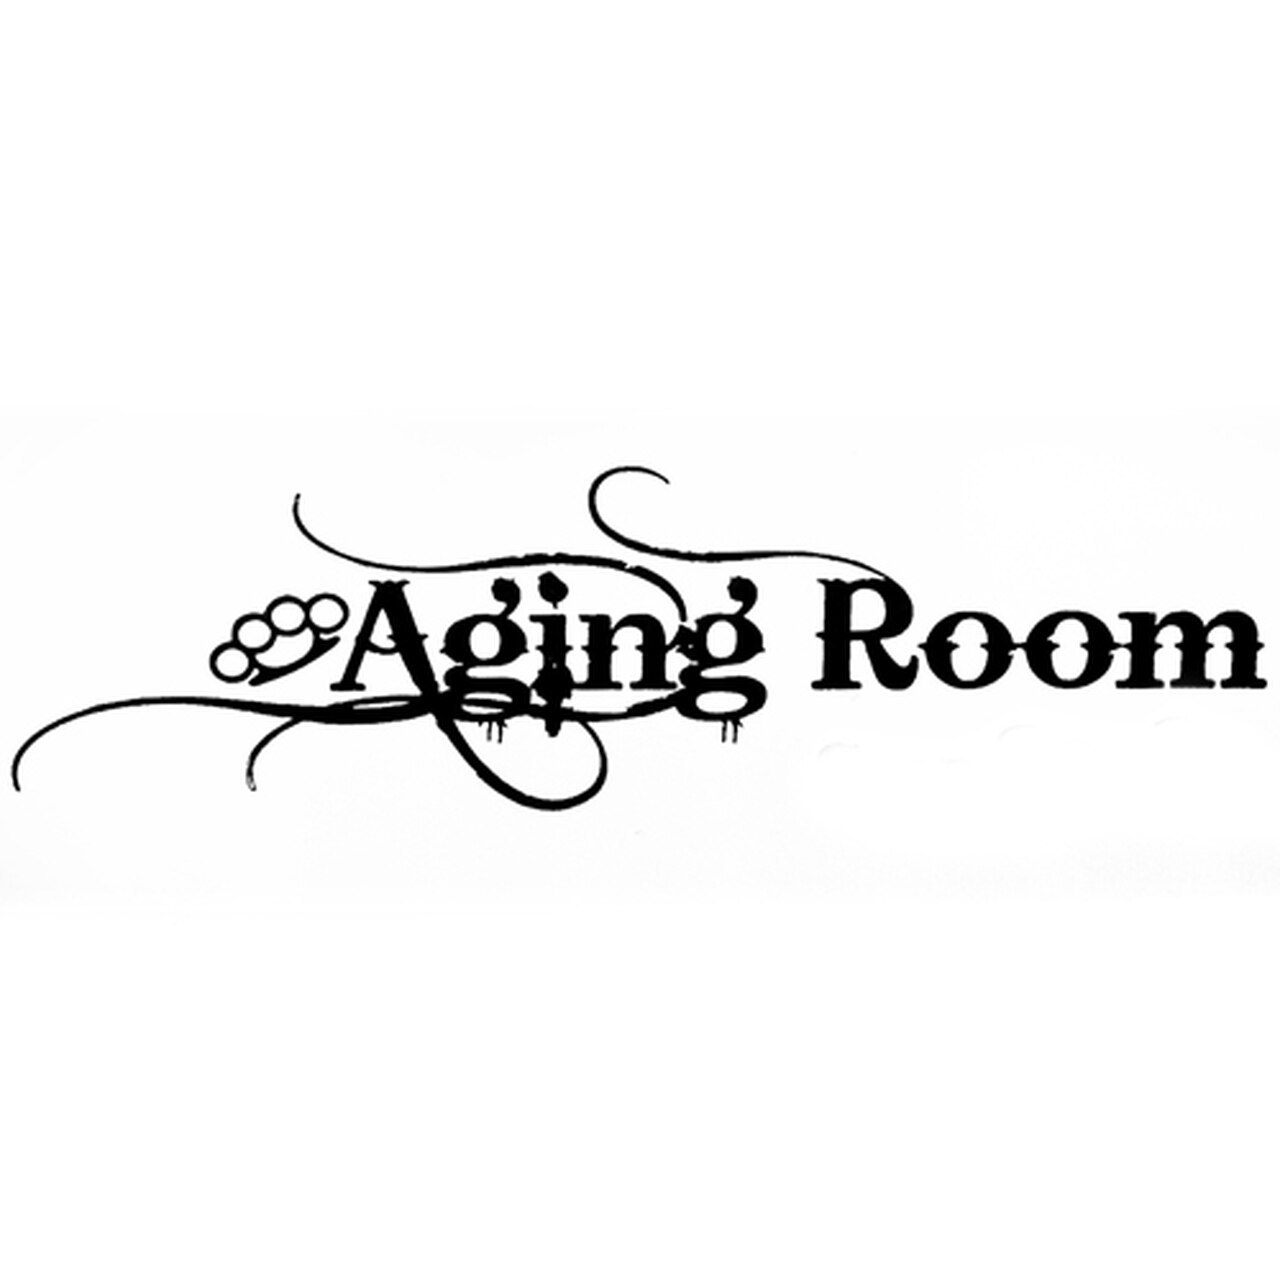 Aging Room by A.J. Fernandez